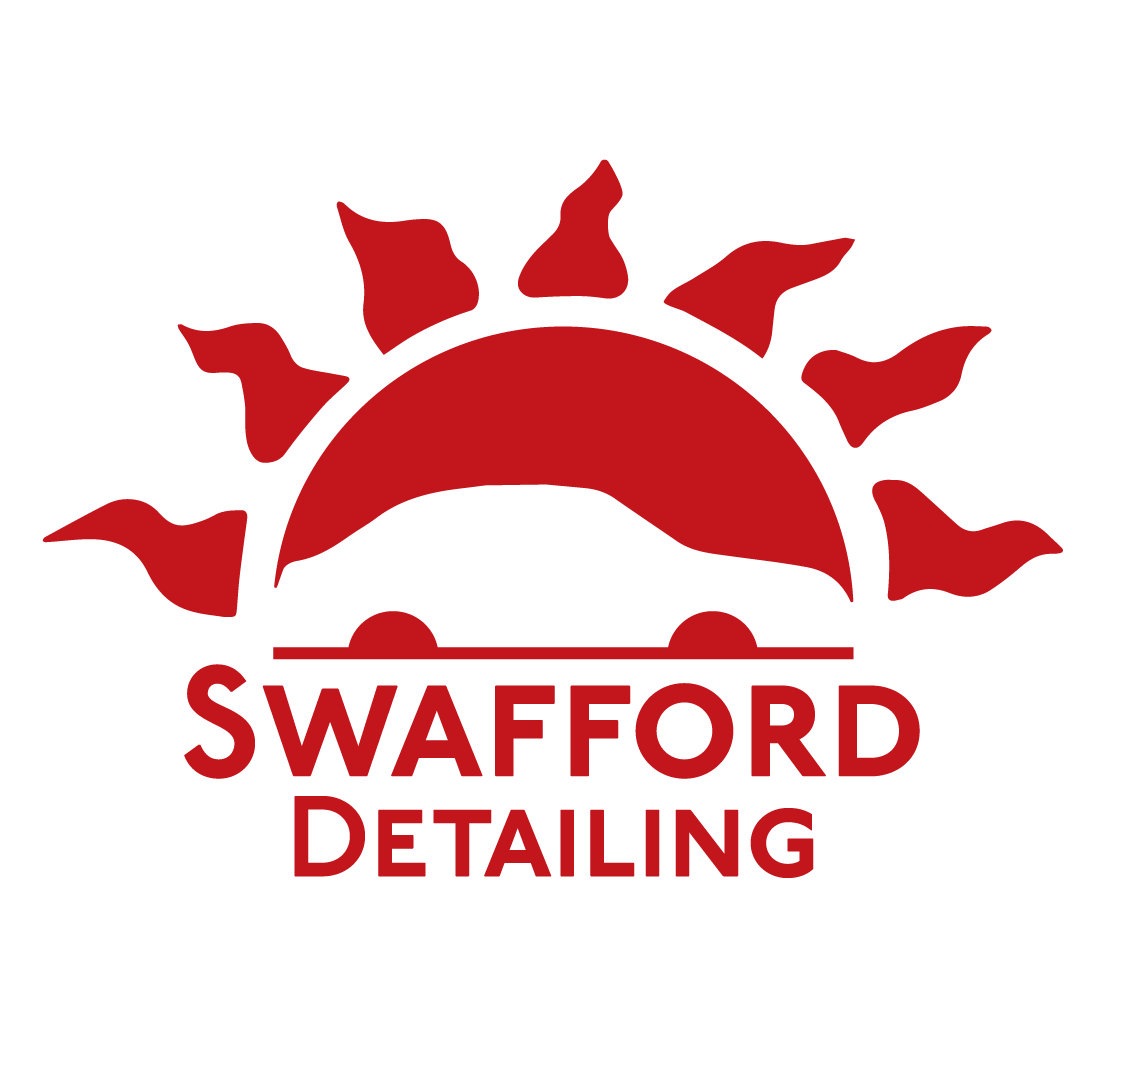 Swafford Detailing